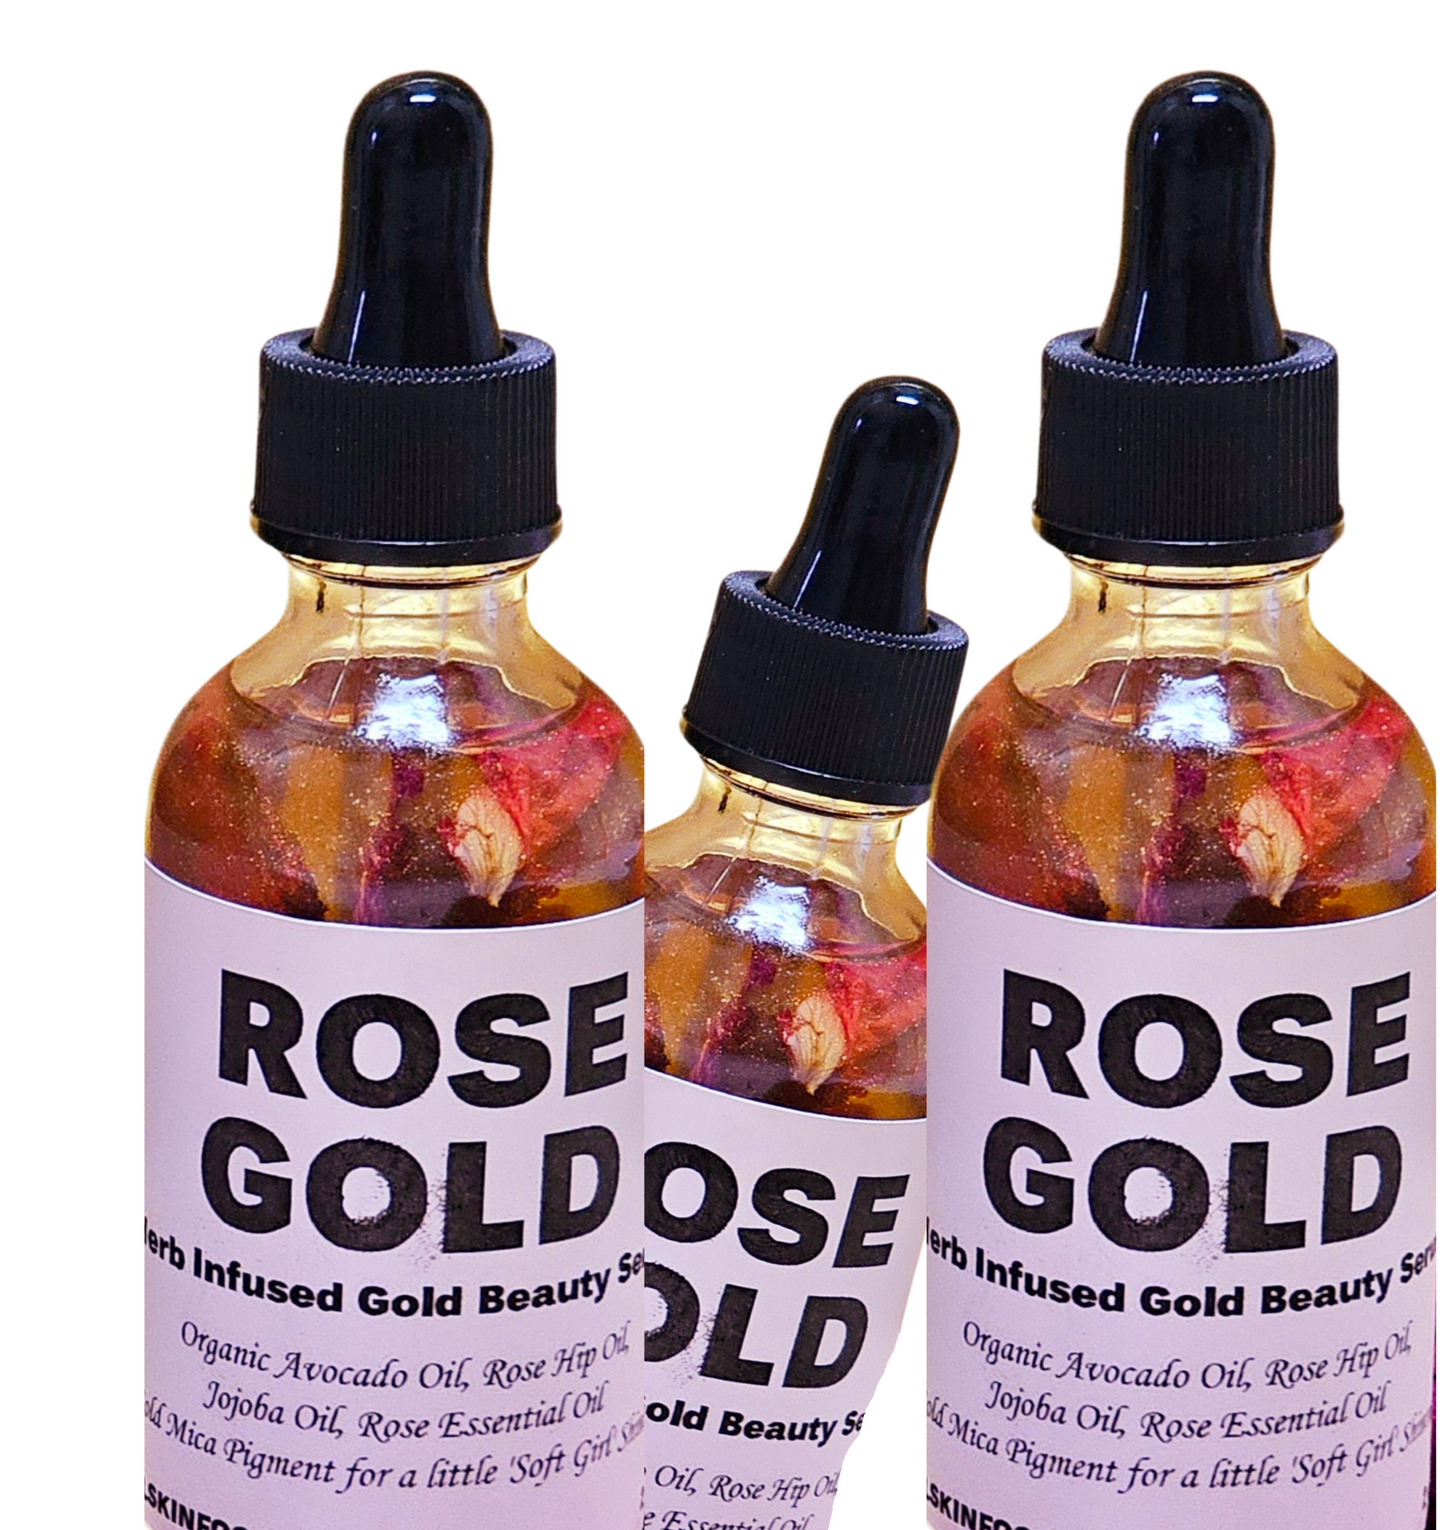 ROSE GOLD Beauty Serum